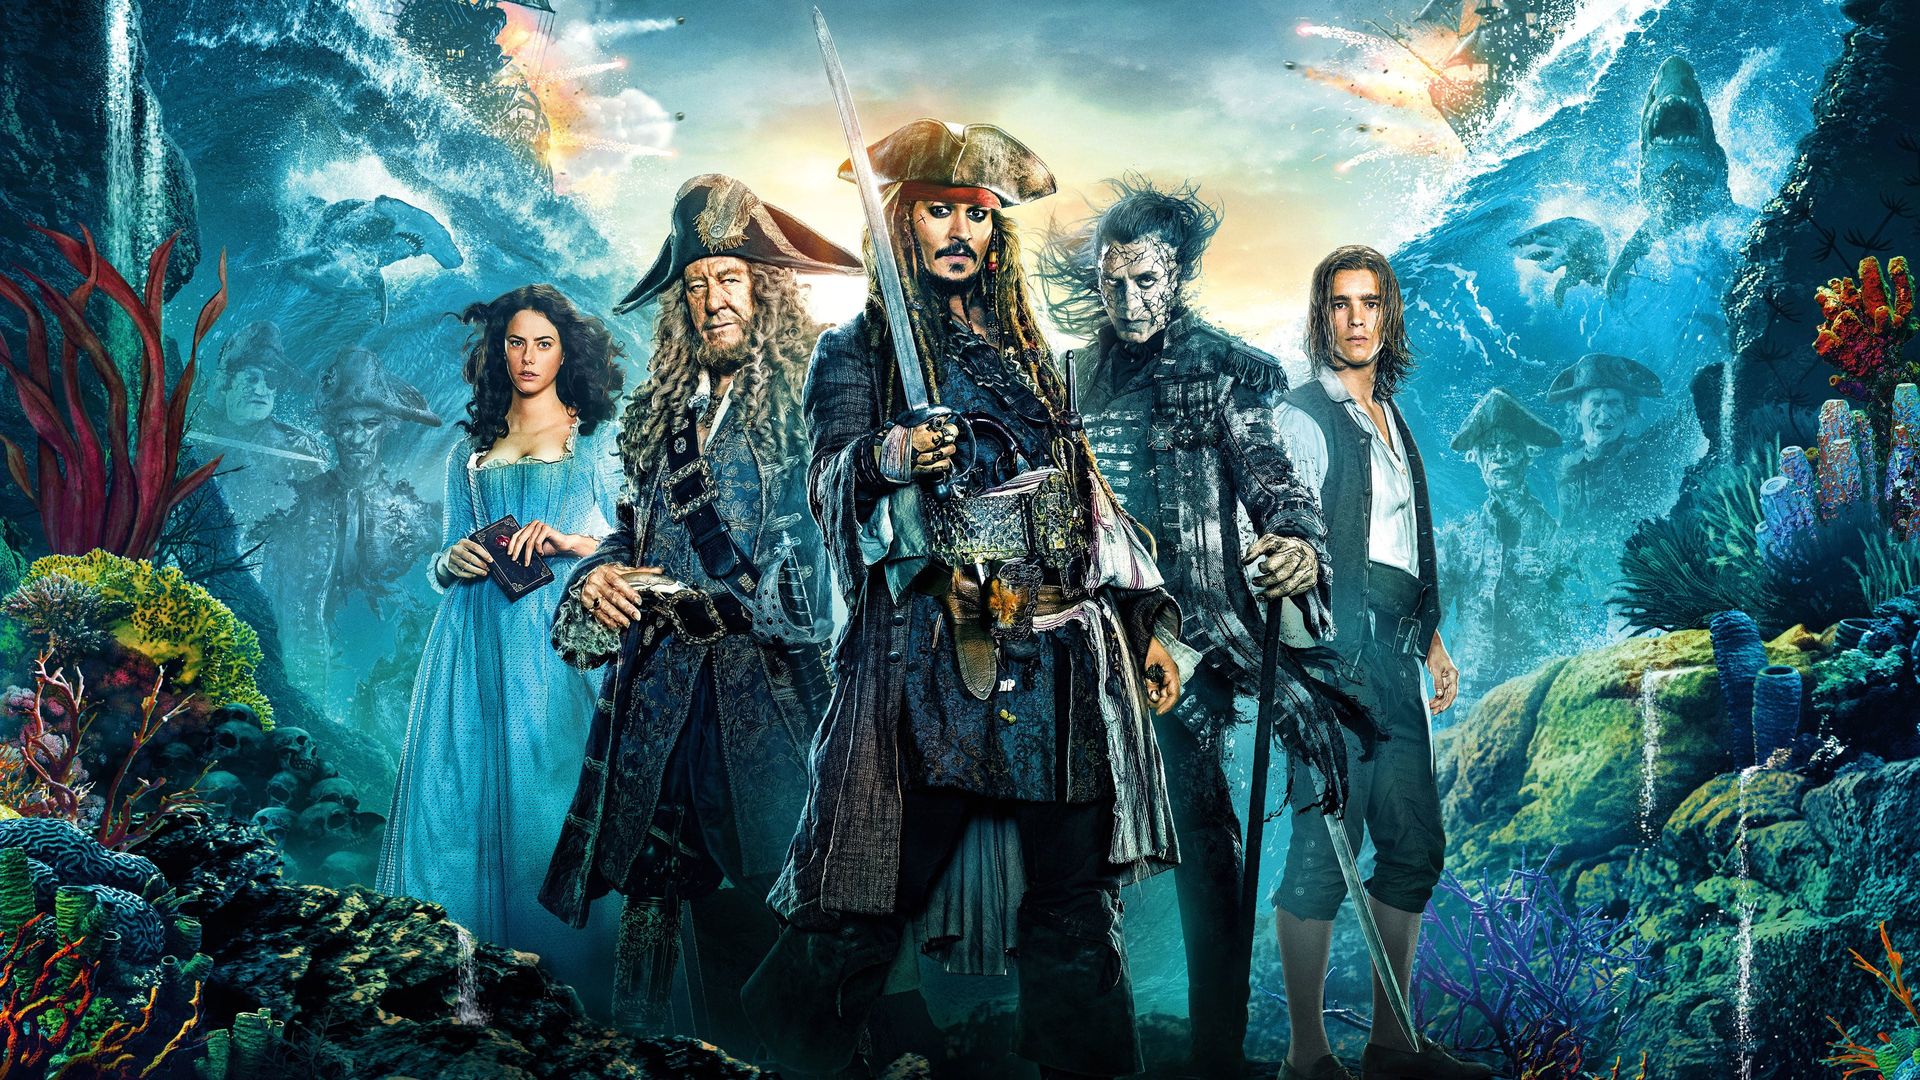 Pirates of the Caribbean: Dead Men Tell No Tales Backdrop